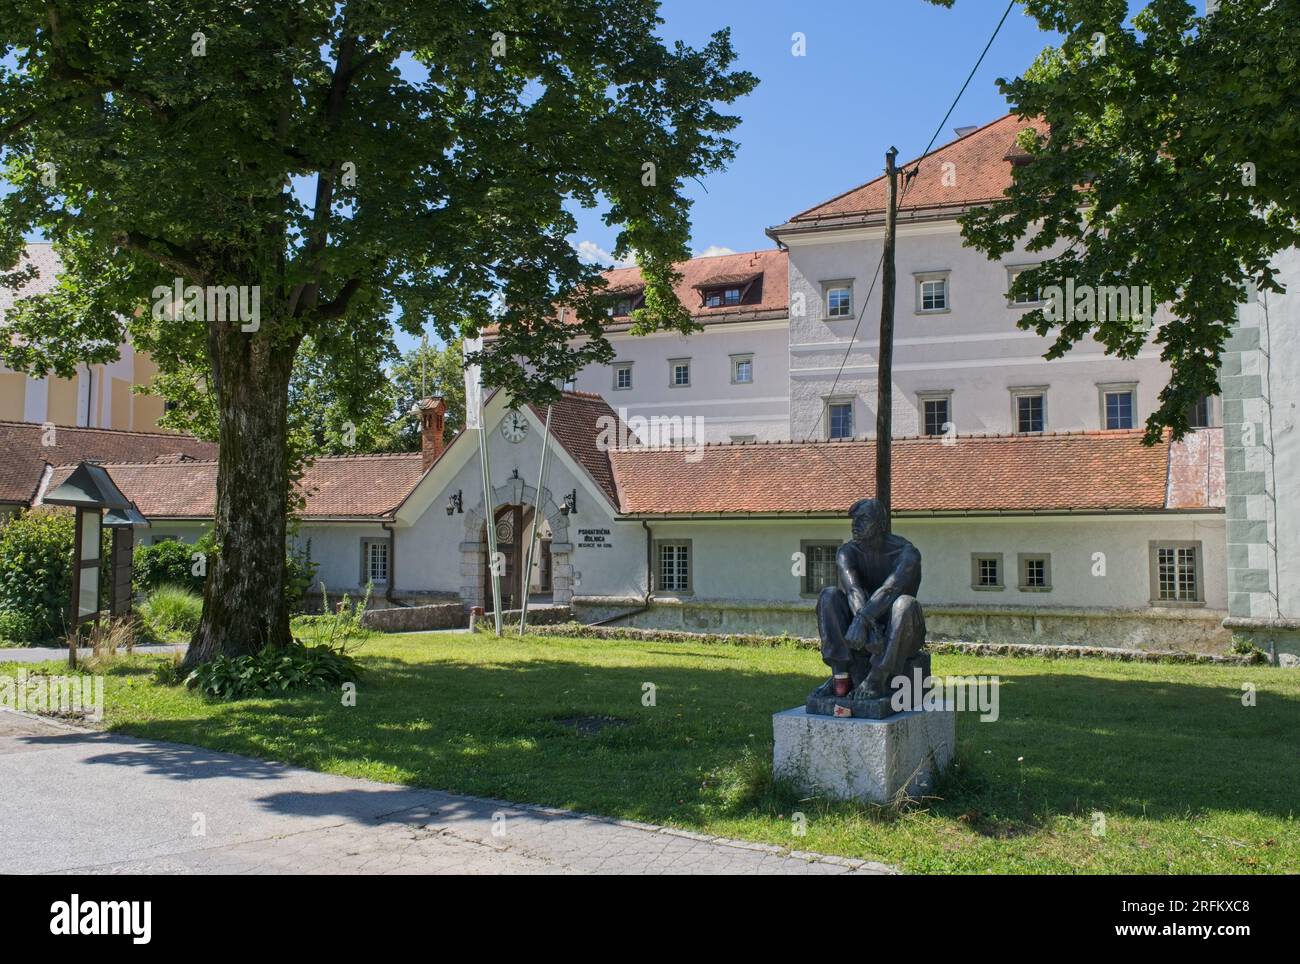 Begunje na Gorenjskem, Slovenia - Jul 29, 2023: During World War II, Kacenstajn Castle was used as a Gestapo prison. More than 11,500 people were impr Stock Photo